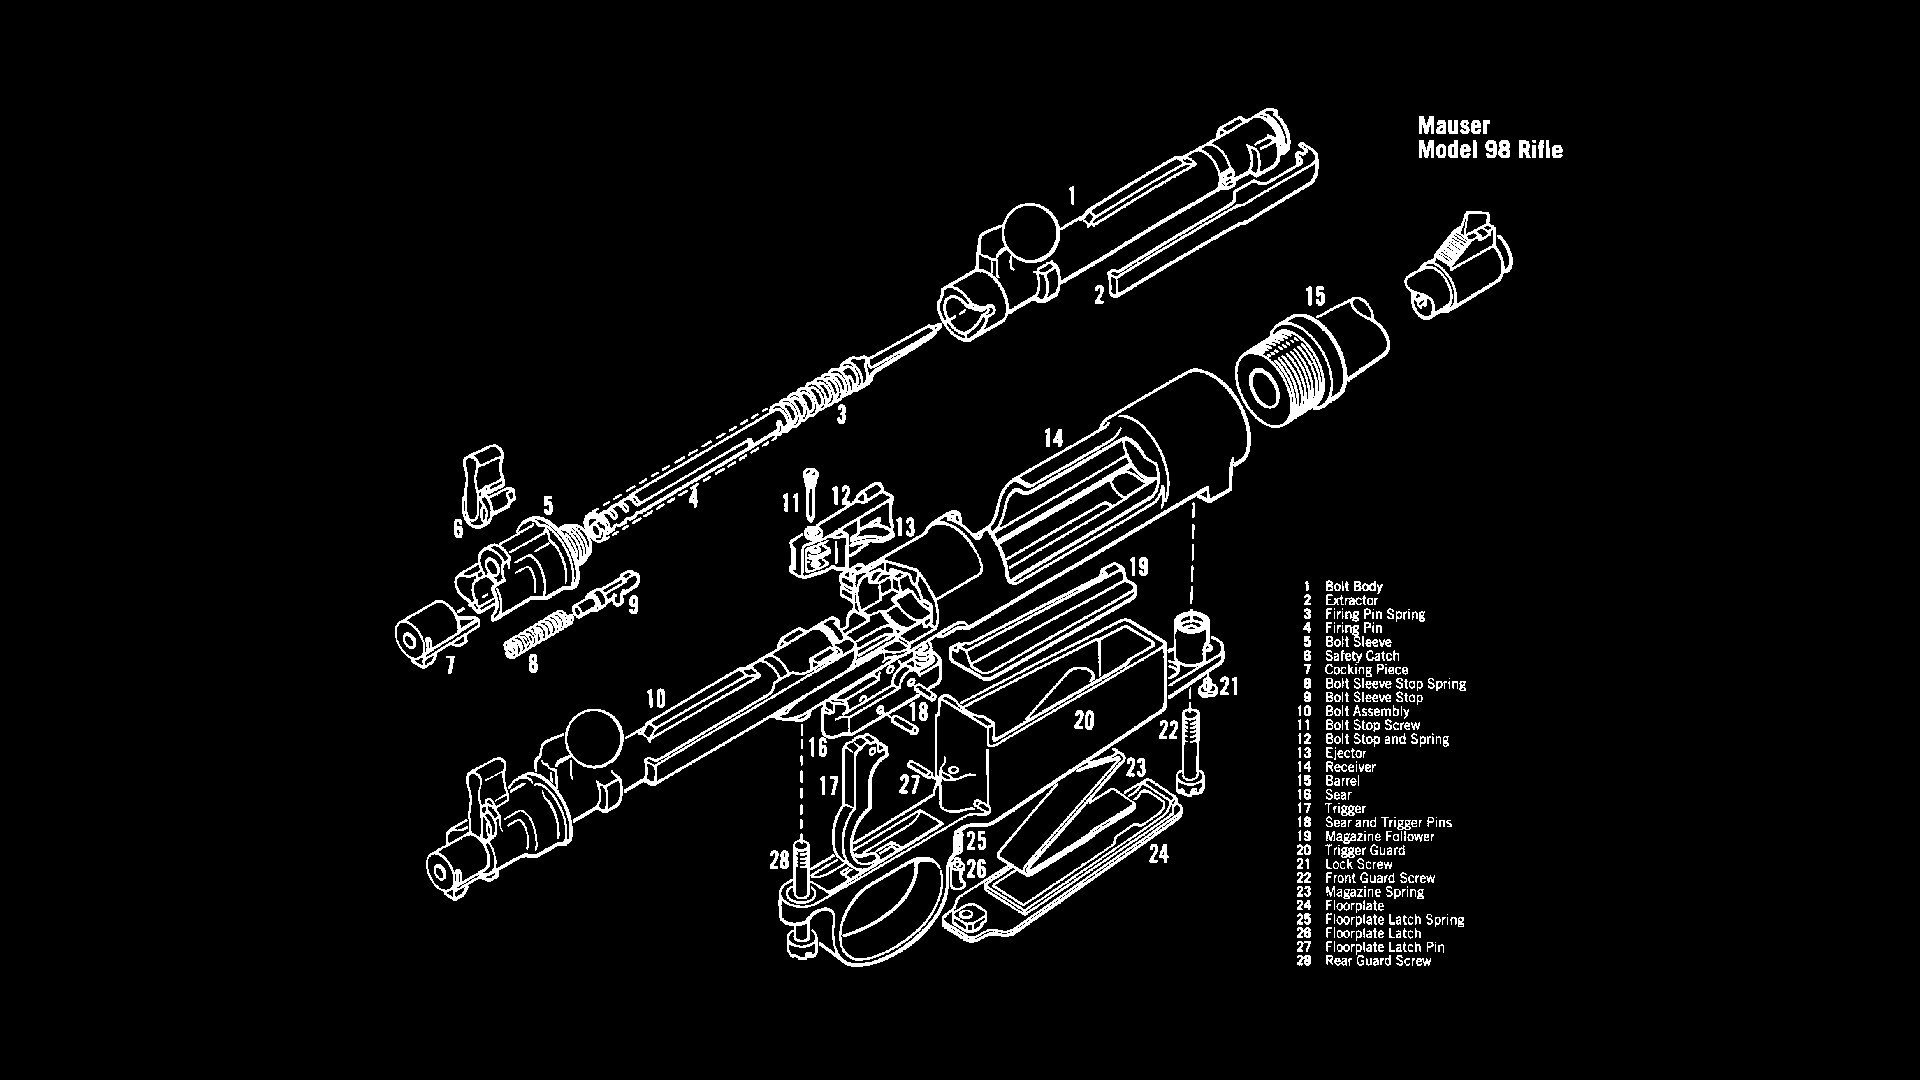 gun, Exploded view diagram, Mauser Wallpaper